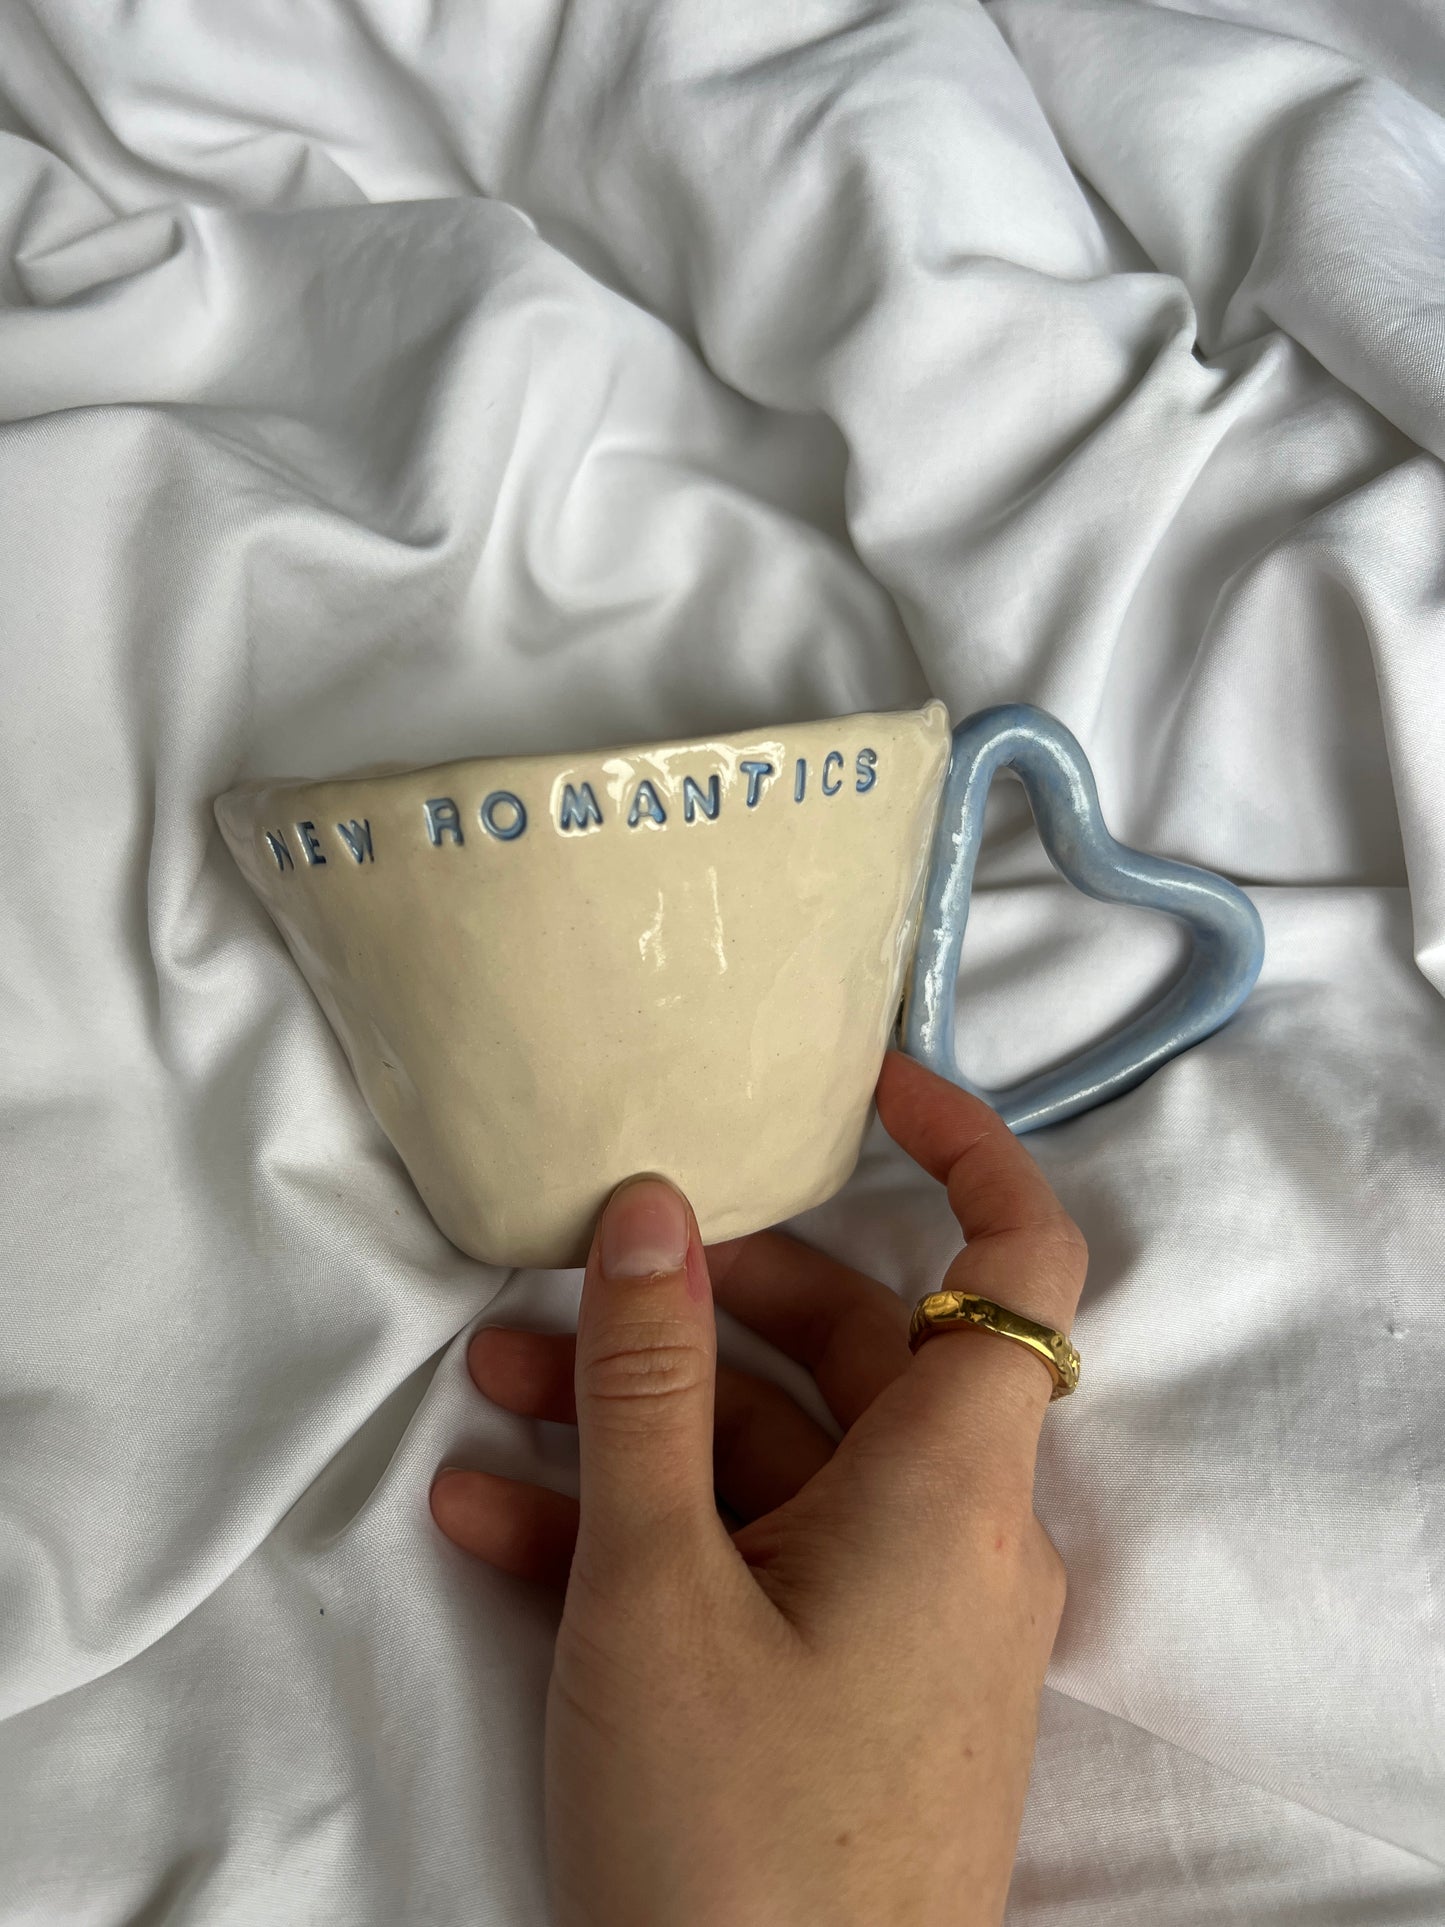 The new romantics mug